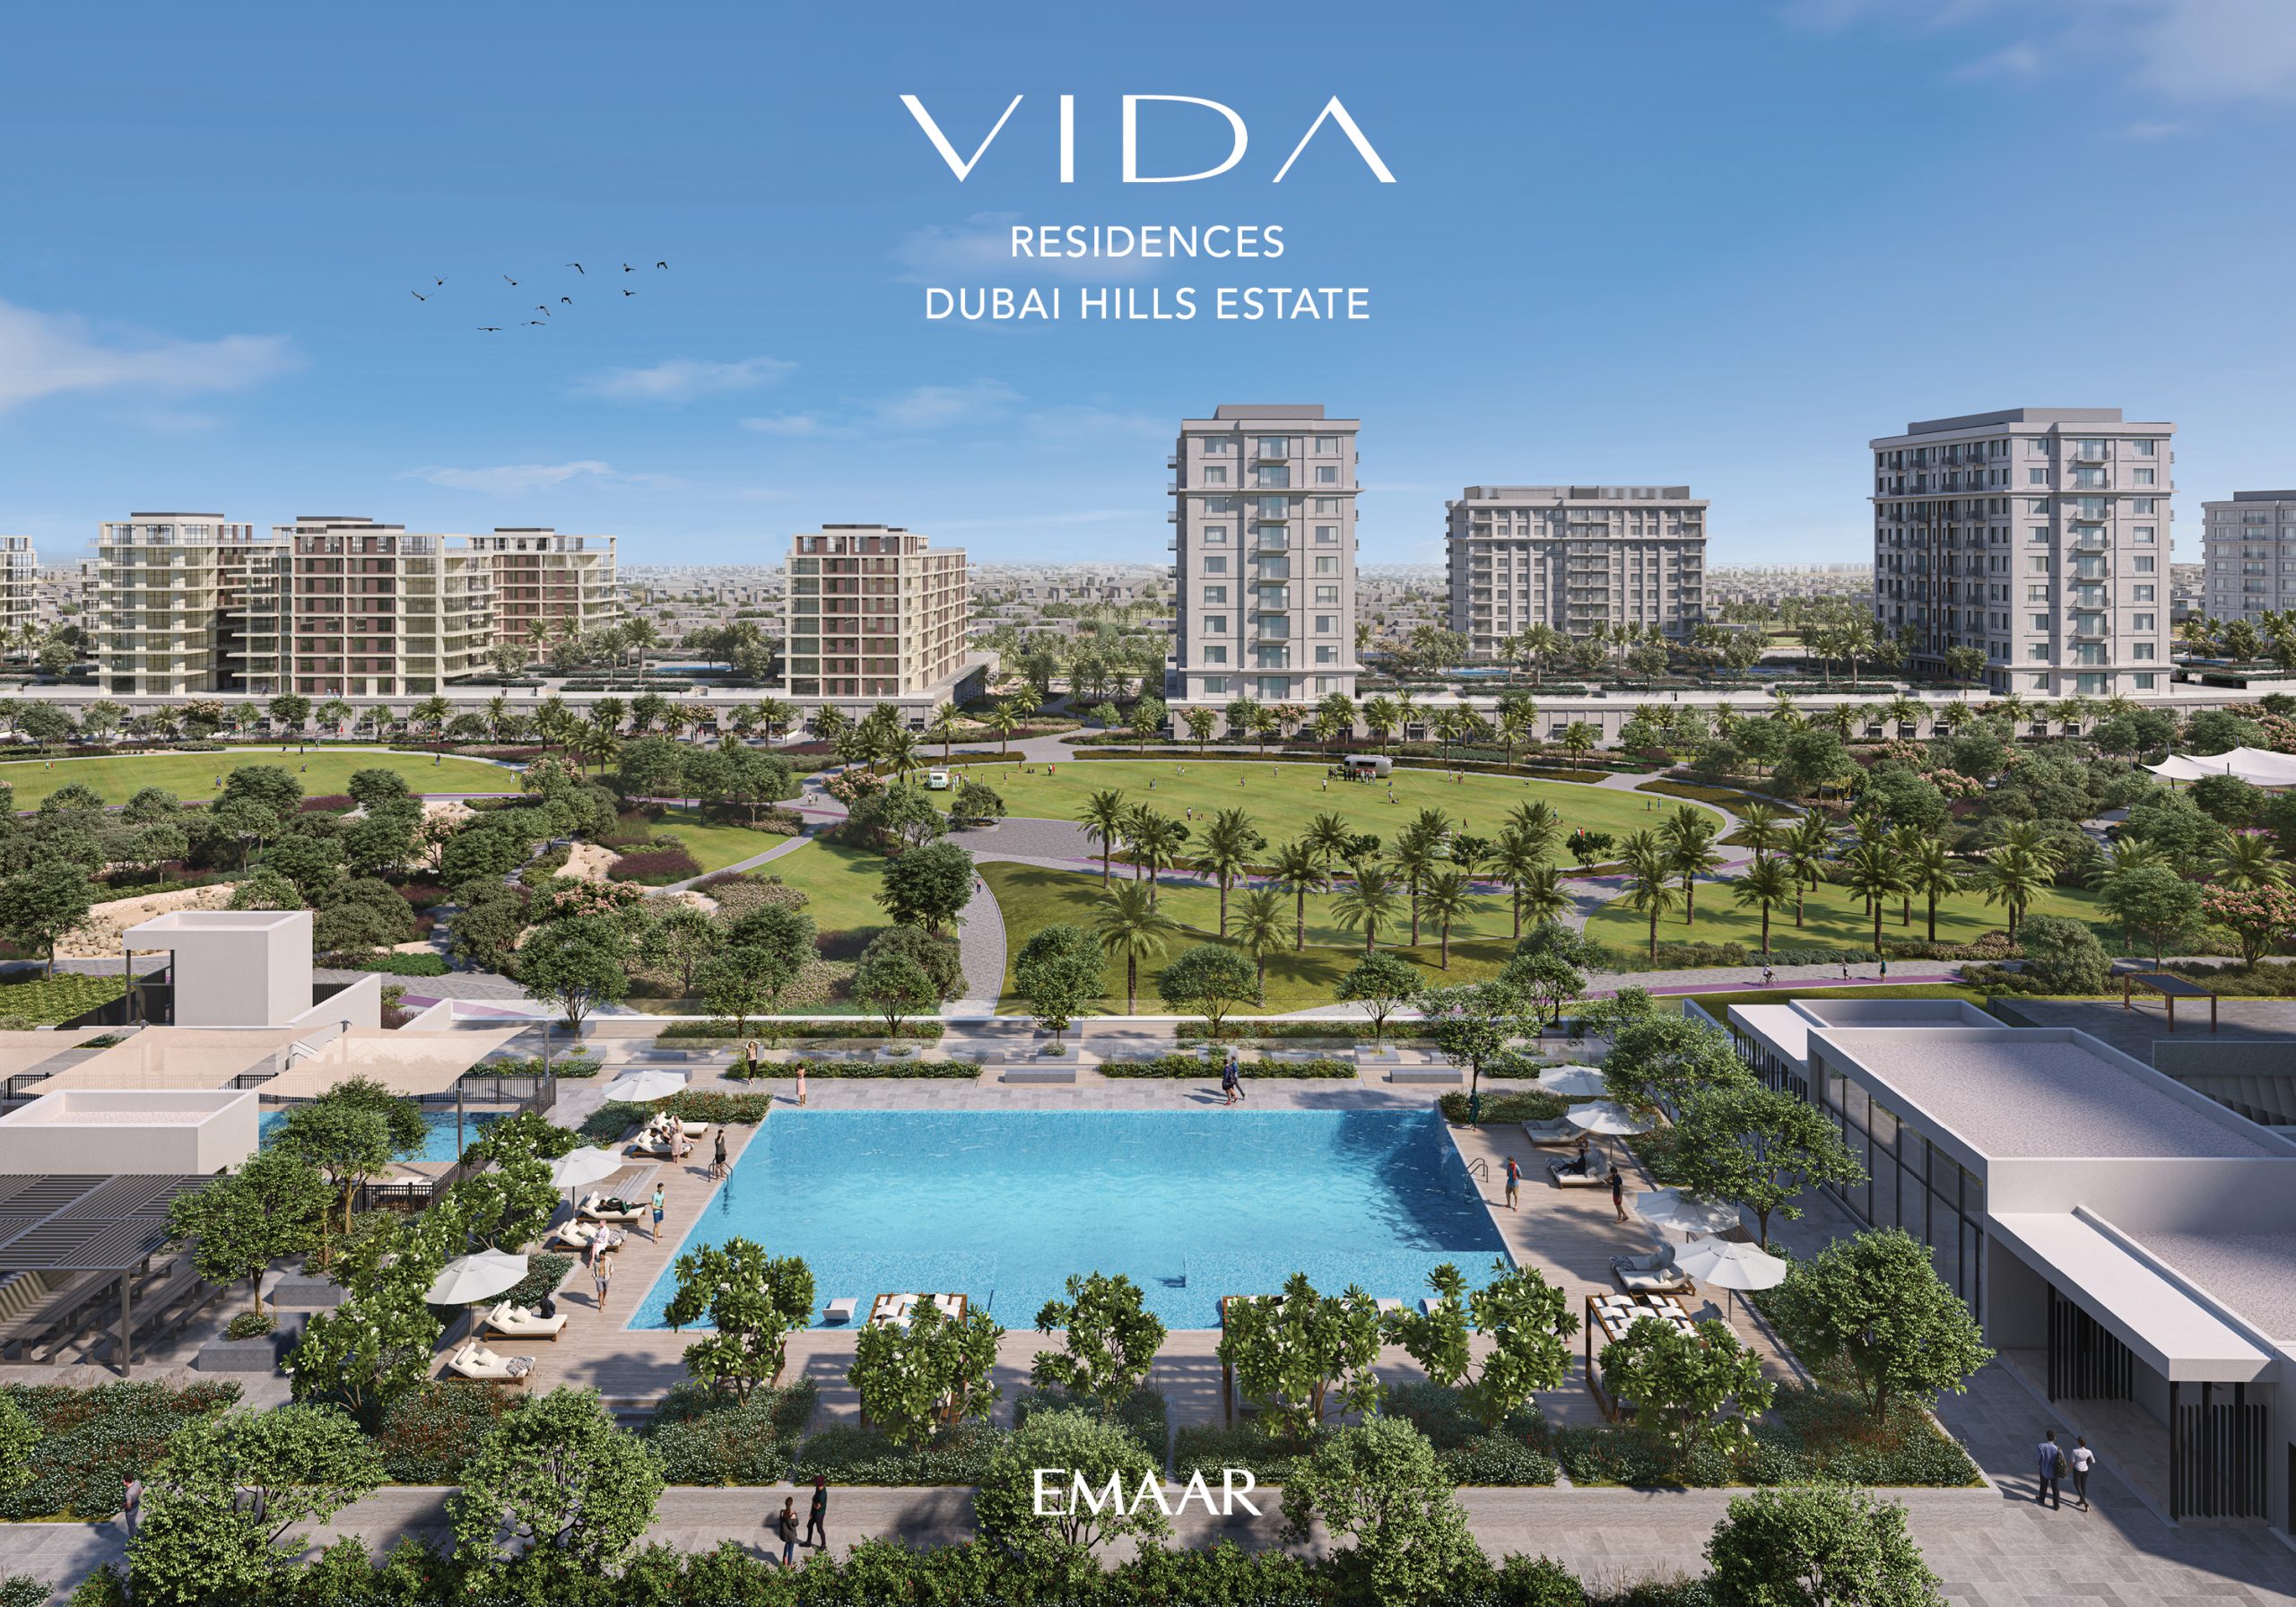 EMAAR-VIDA-RESIDENCES-DUBAI-HILLS-ESTATE-investindxb-07-scaled.jpg